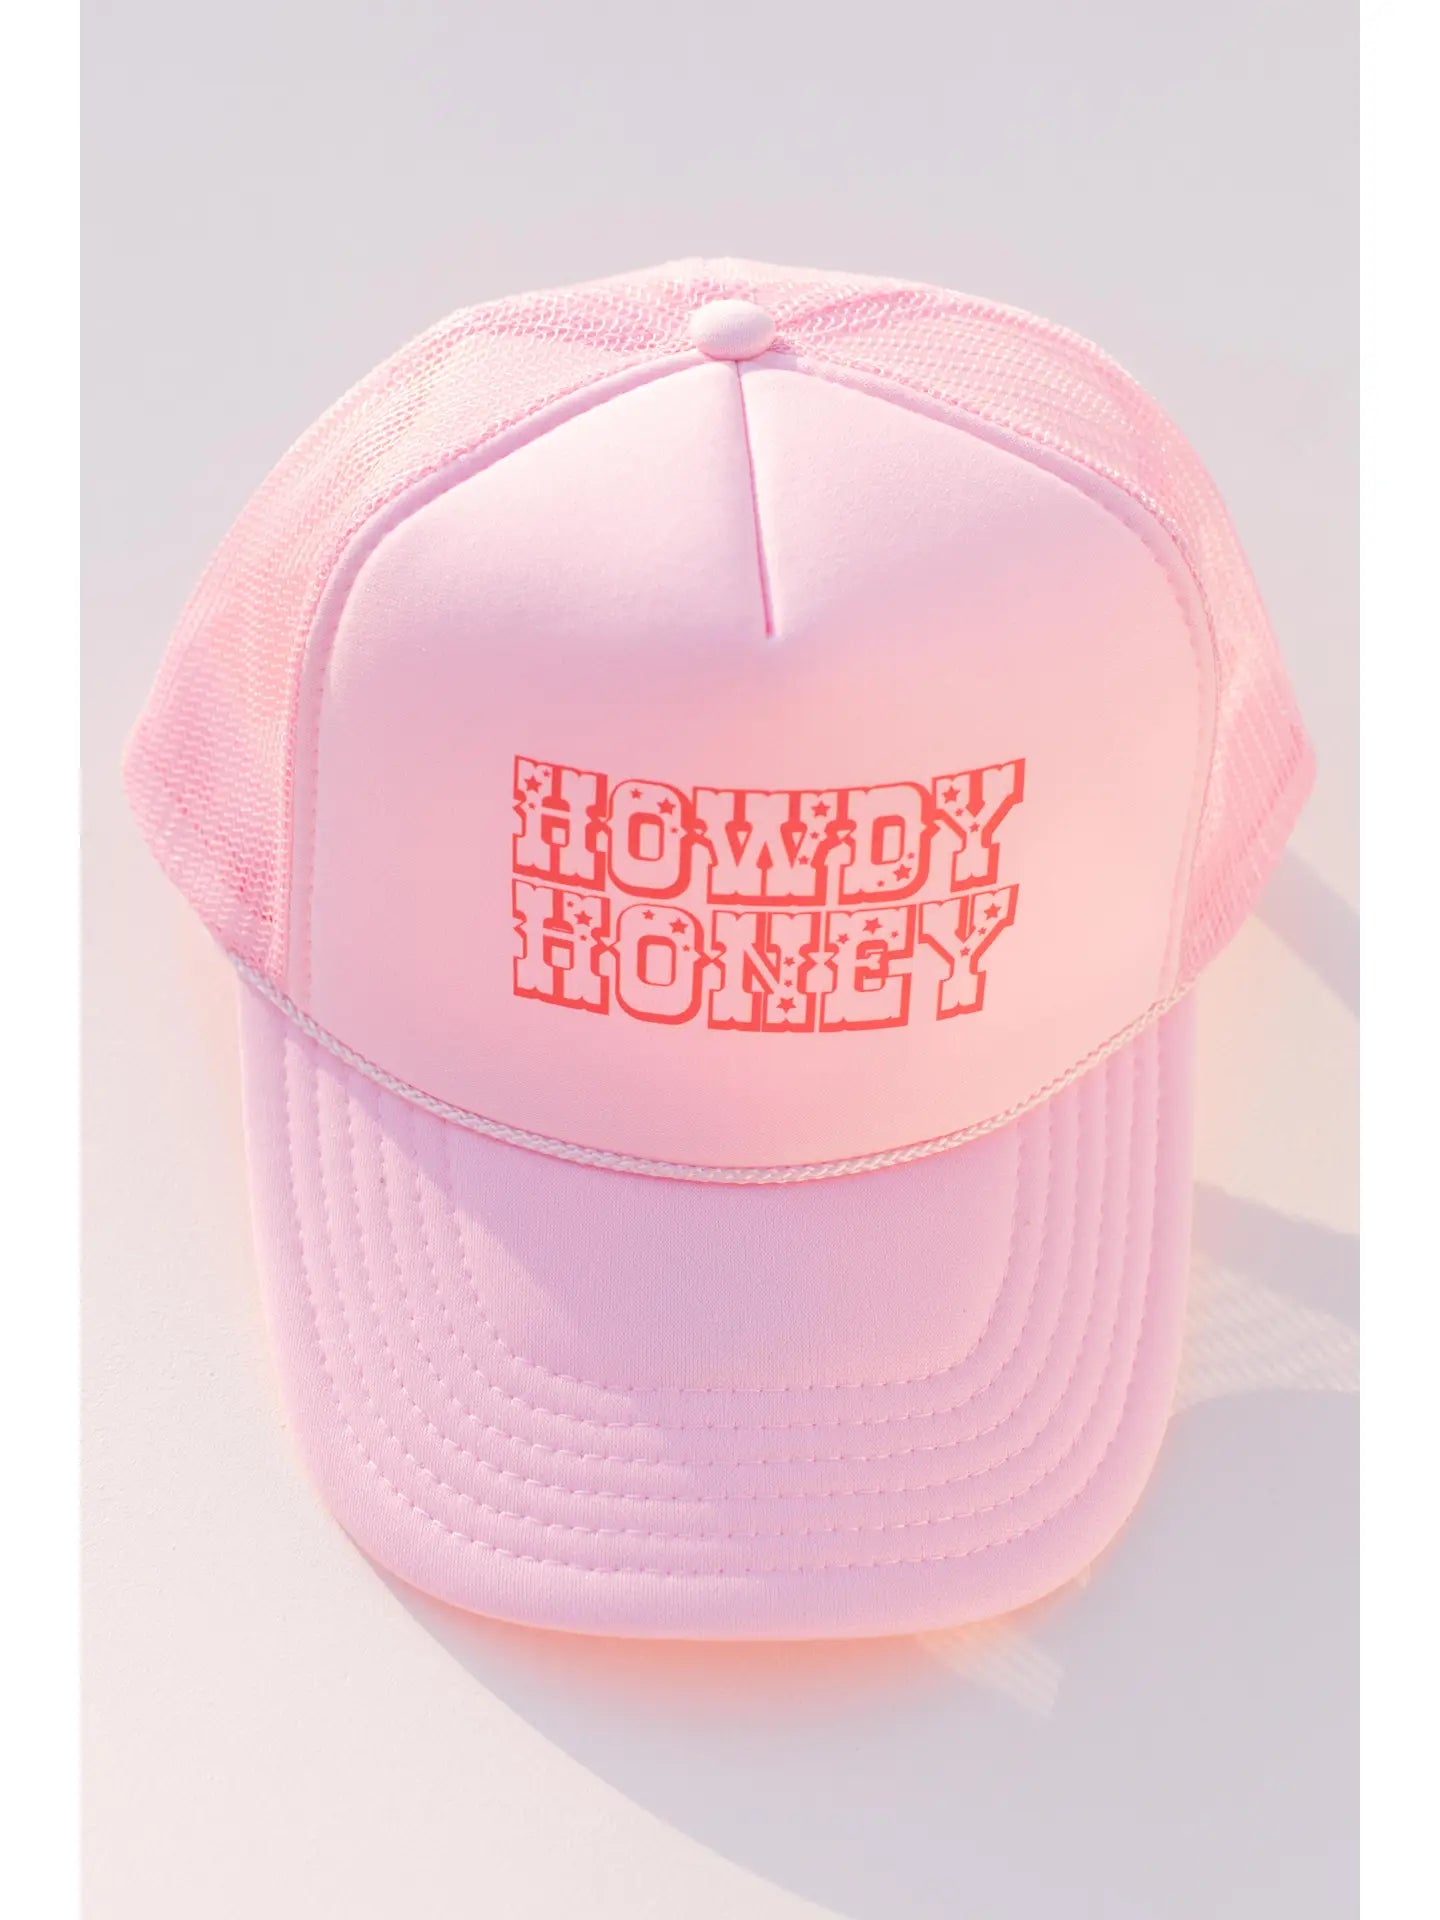 howdy honey trucker hat